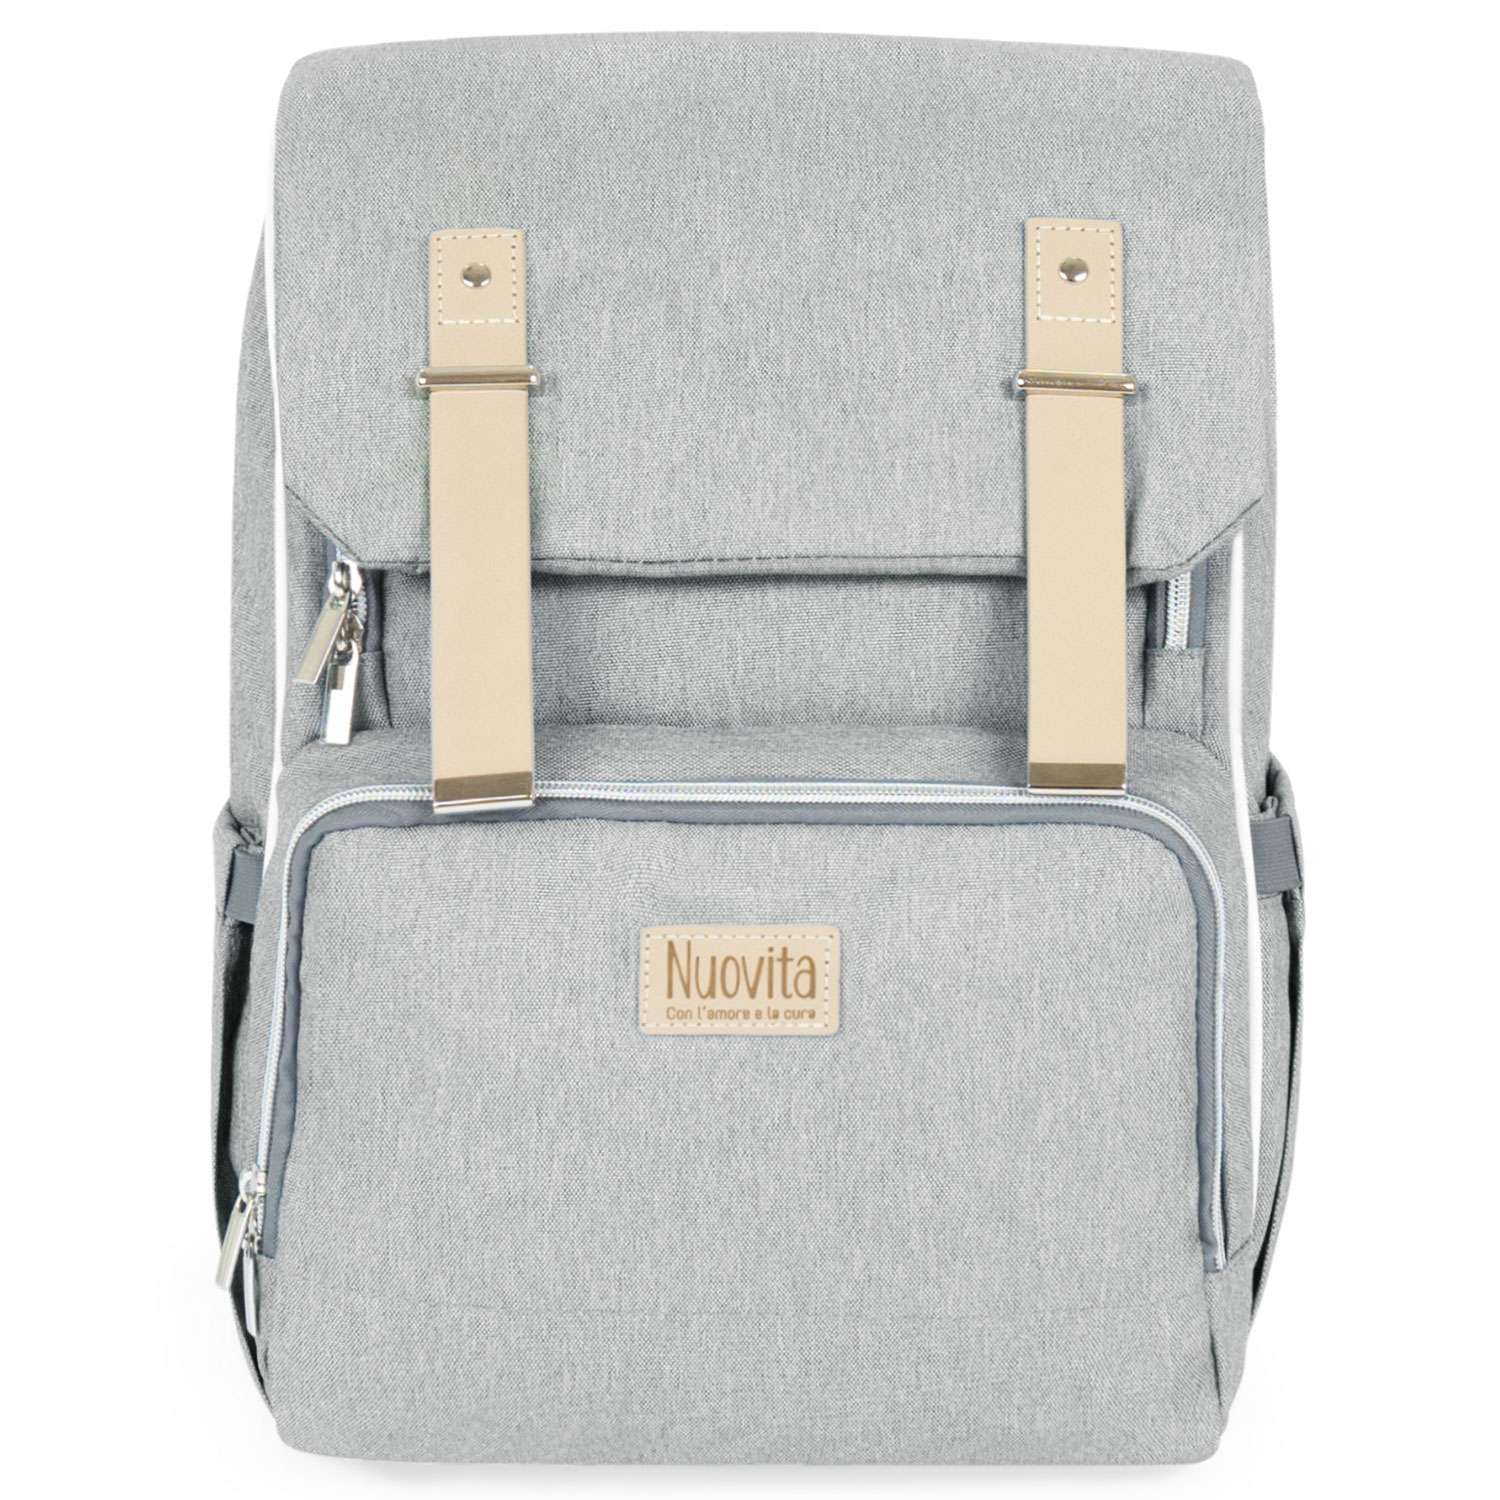 Рюкзак для мамы Nuovita Capcap rotta Светло-серый - фото 2